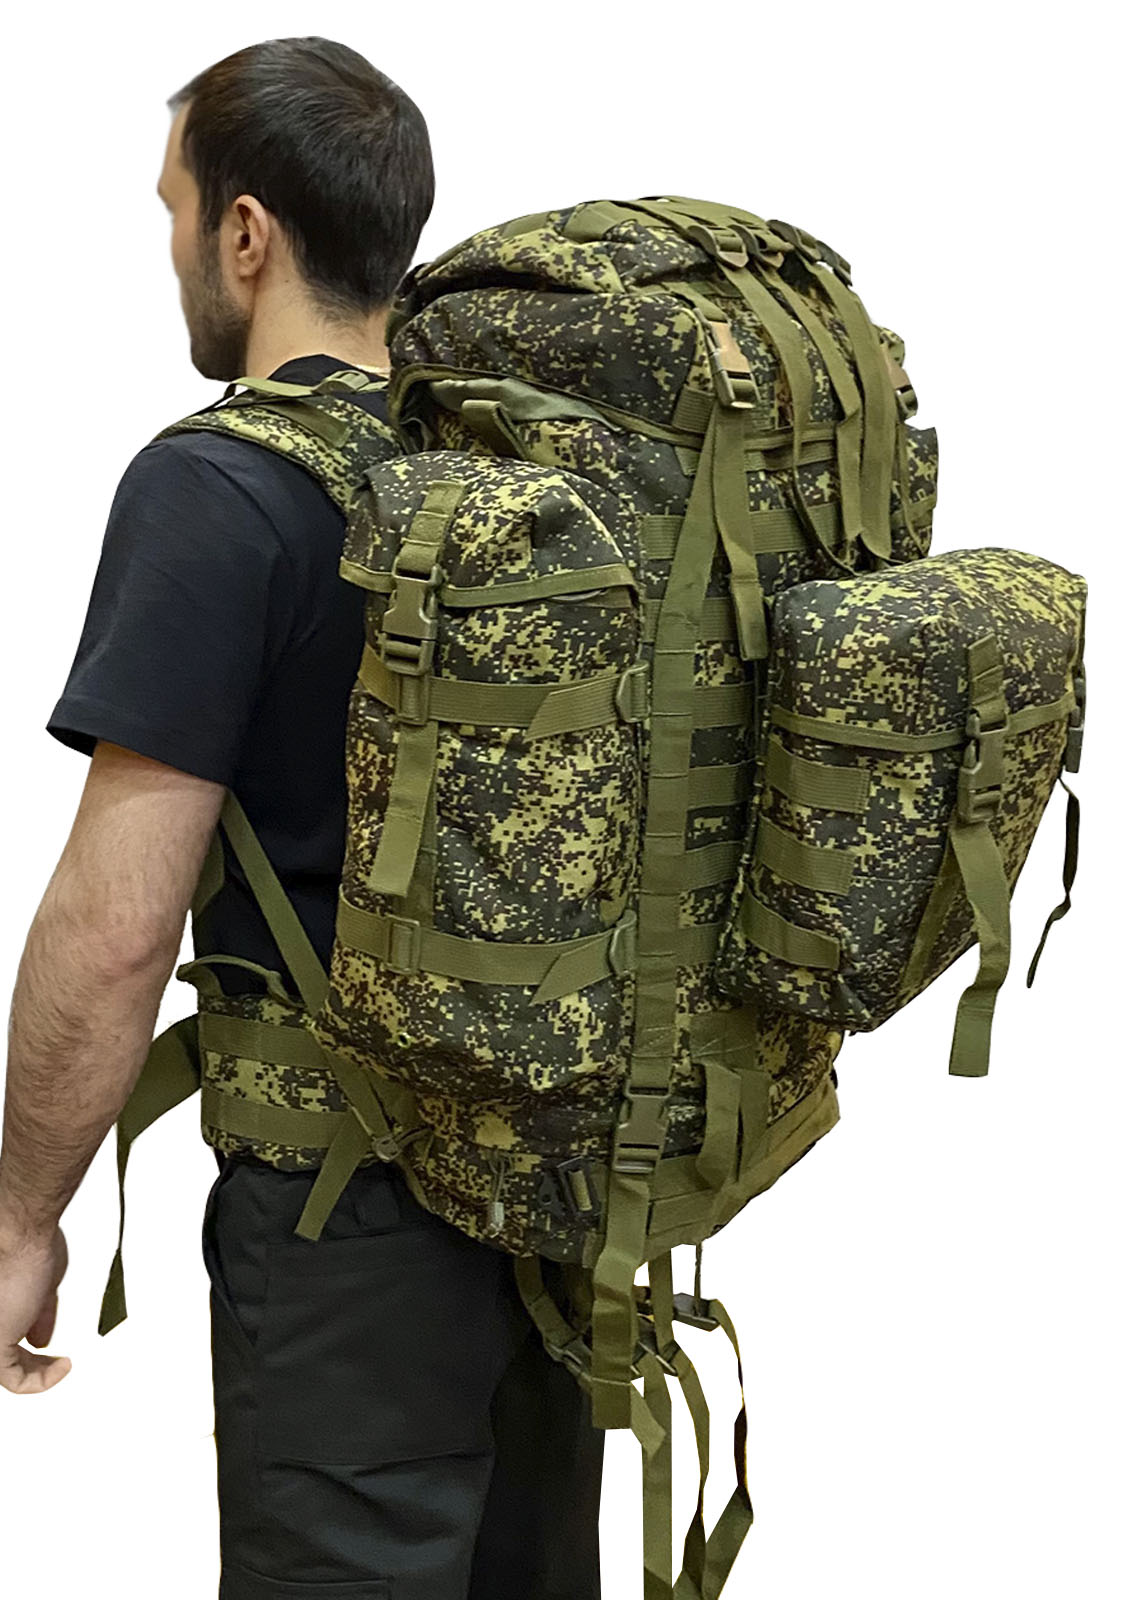  Армейский экспедиционный рюкзак (100 литров, цифра)